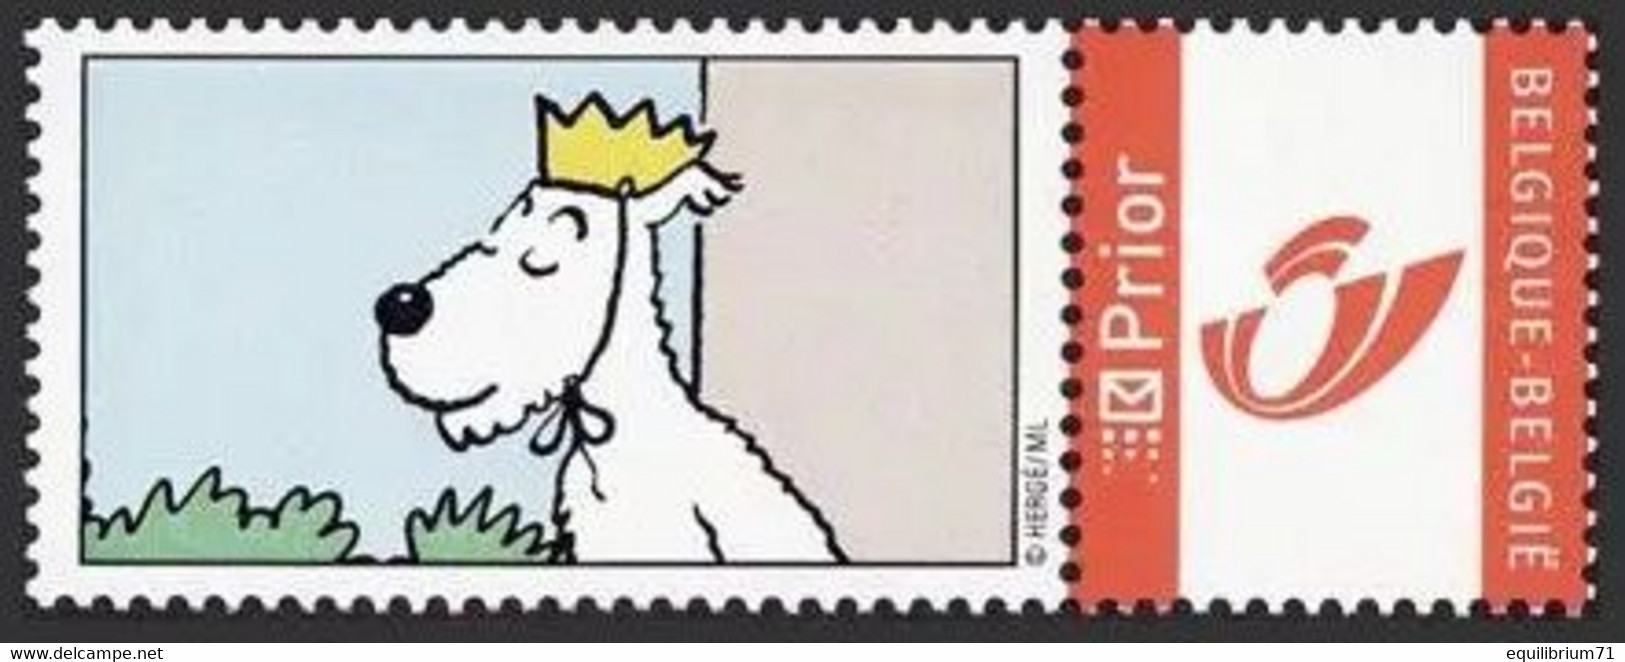 DUOSTAMP/MYSTAMP** - Milou, Roi / Bobbie, Koning / Struppi, König / Snowy, King - (Hergé) - Philabédés (comics)